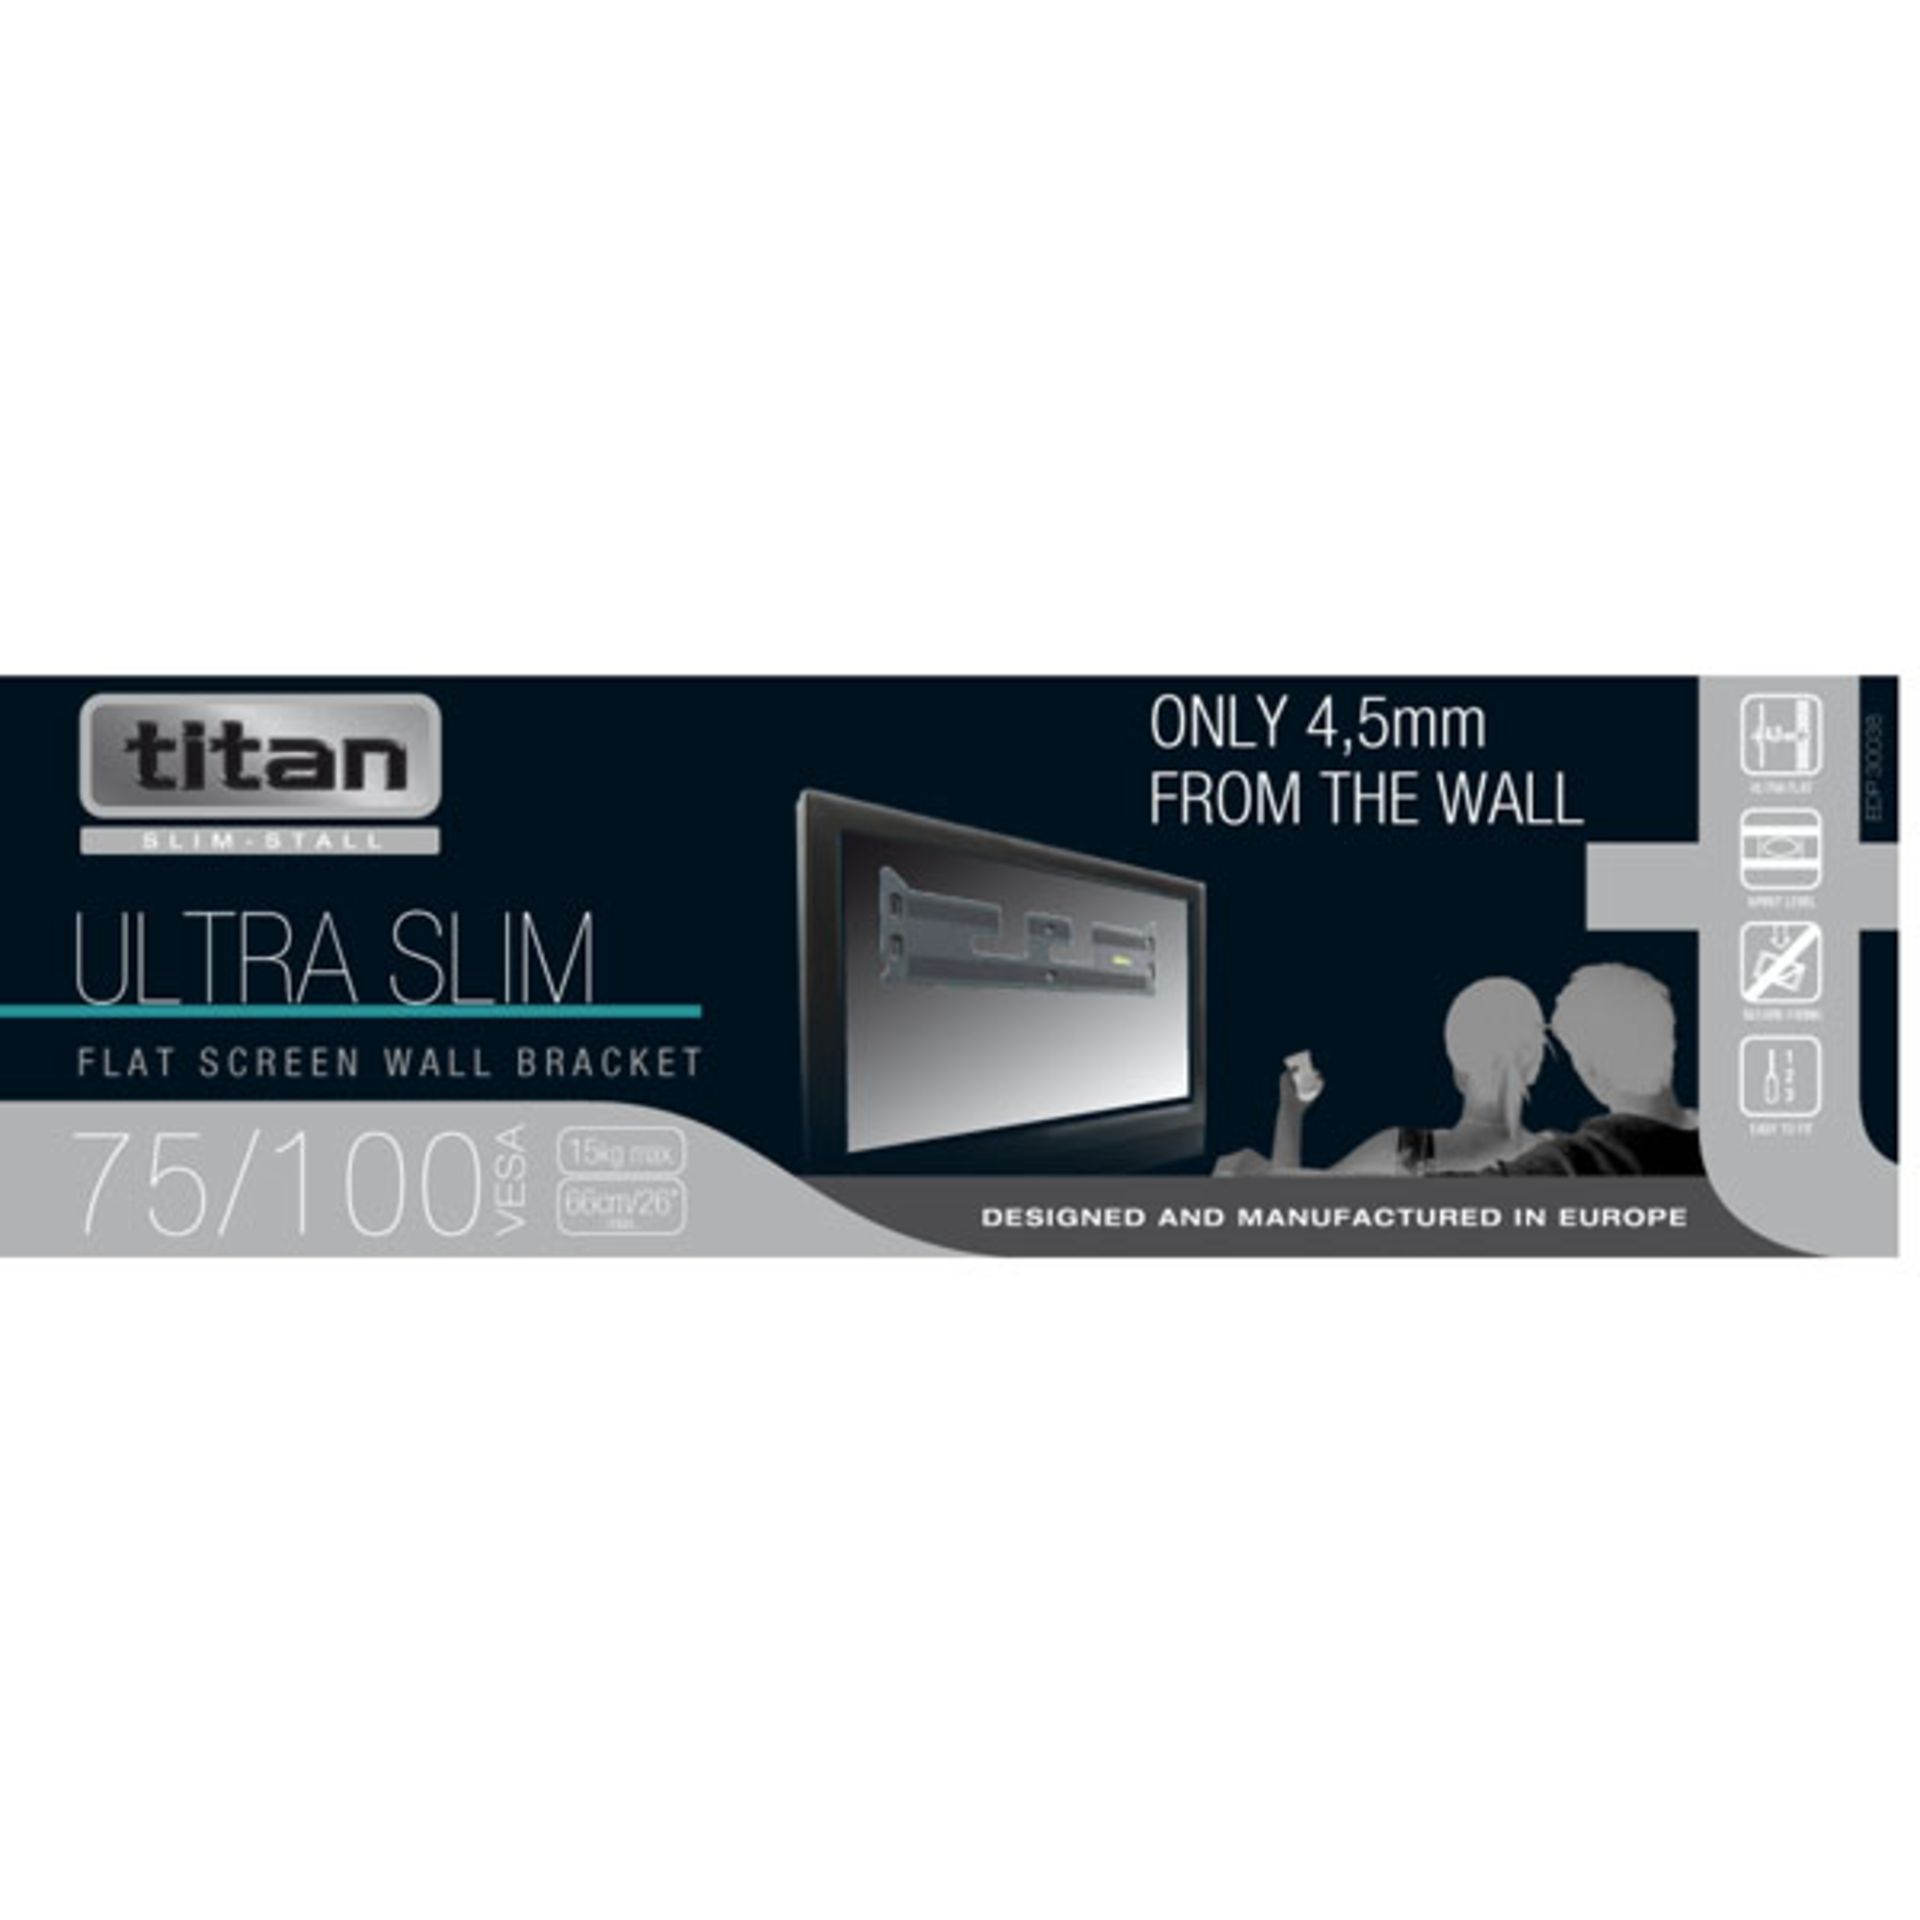 Brand New Titan Ultra Slim Flat Screen Wall Bracket 66cm/26" - 15KG maximum - Only 4.5mm From the